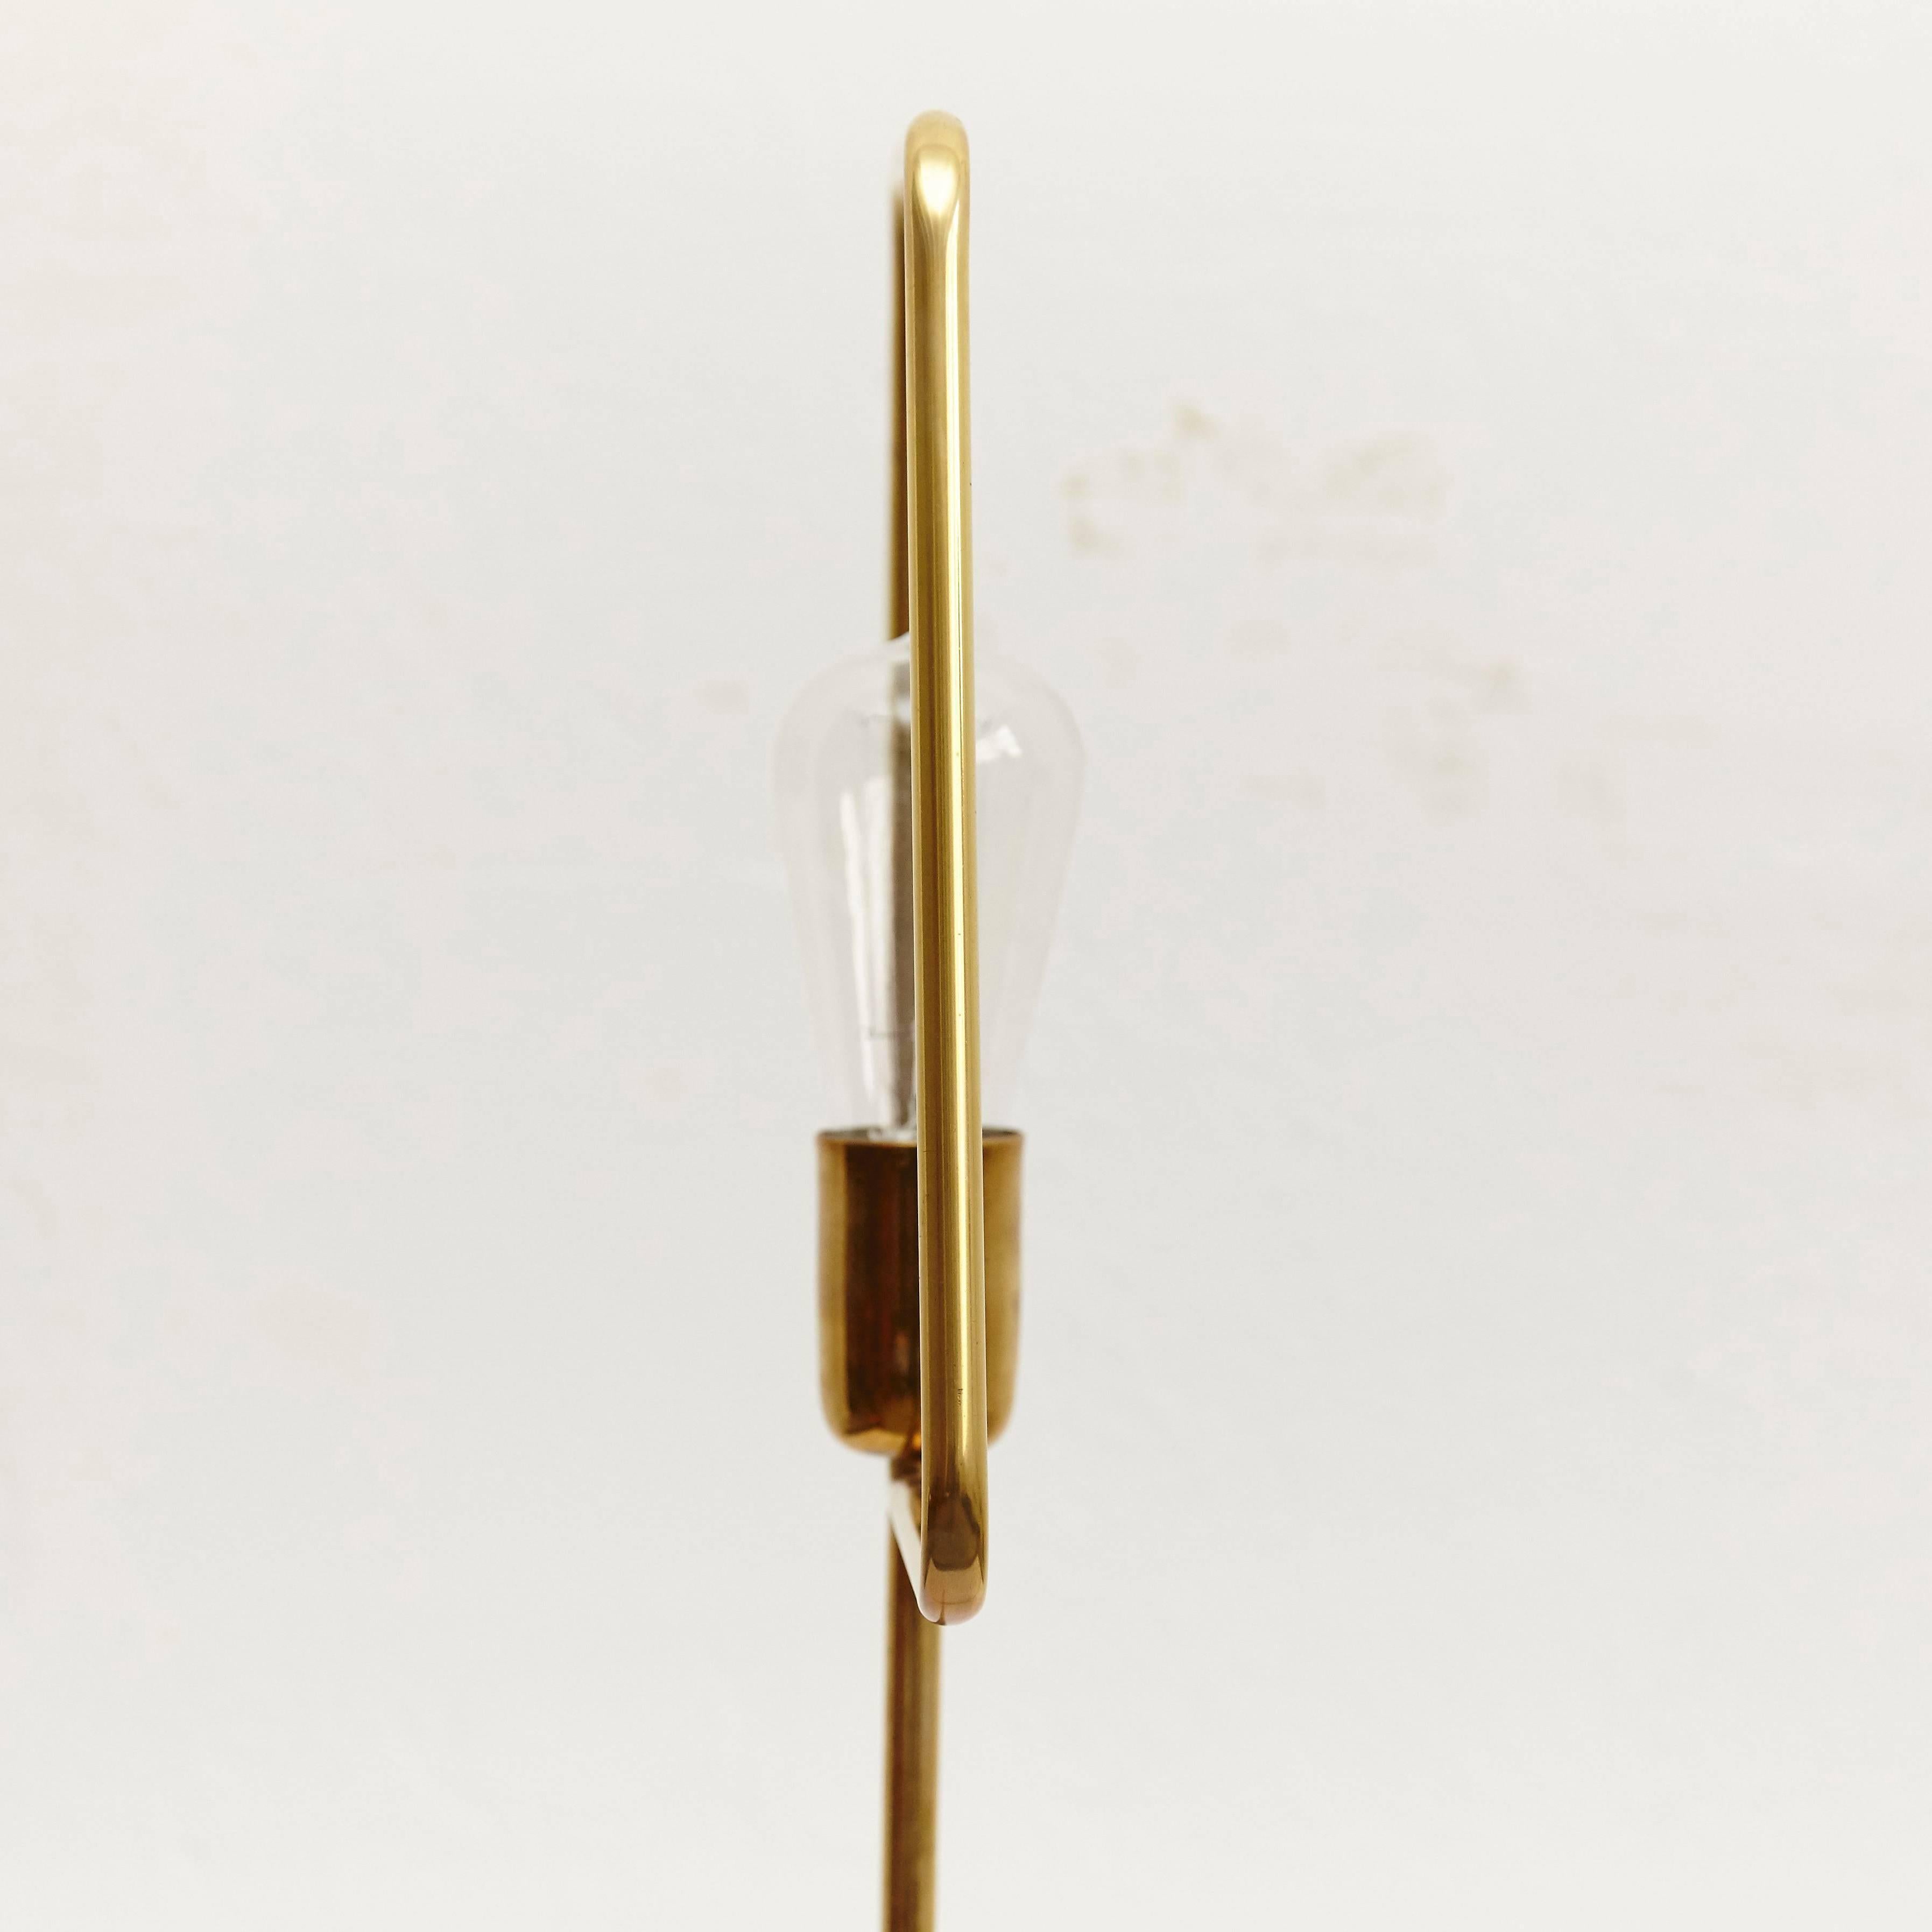 Silver Adolfo Abejon Contemporary Design 'Slim Brass' Lamp Prototype in Brass, 2016